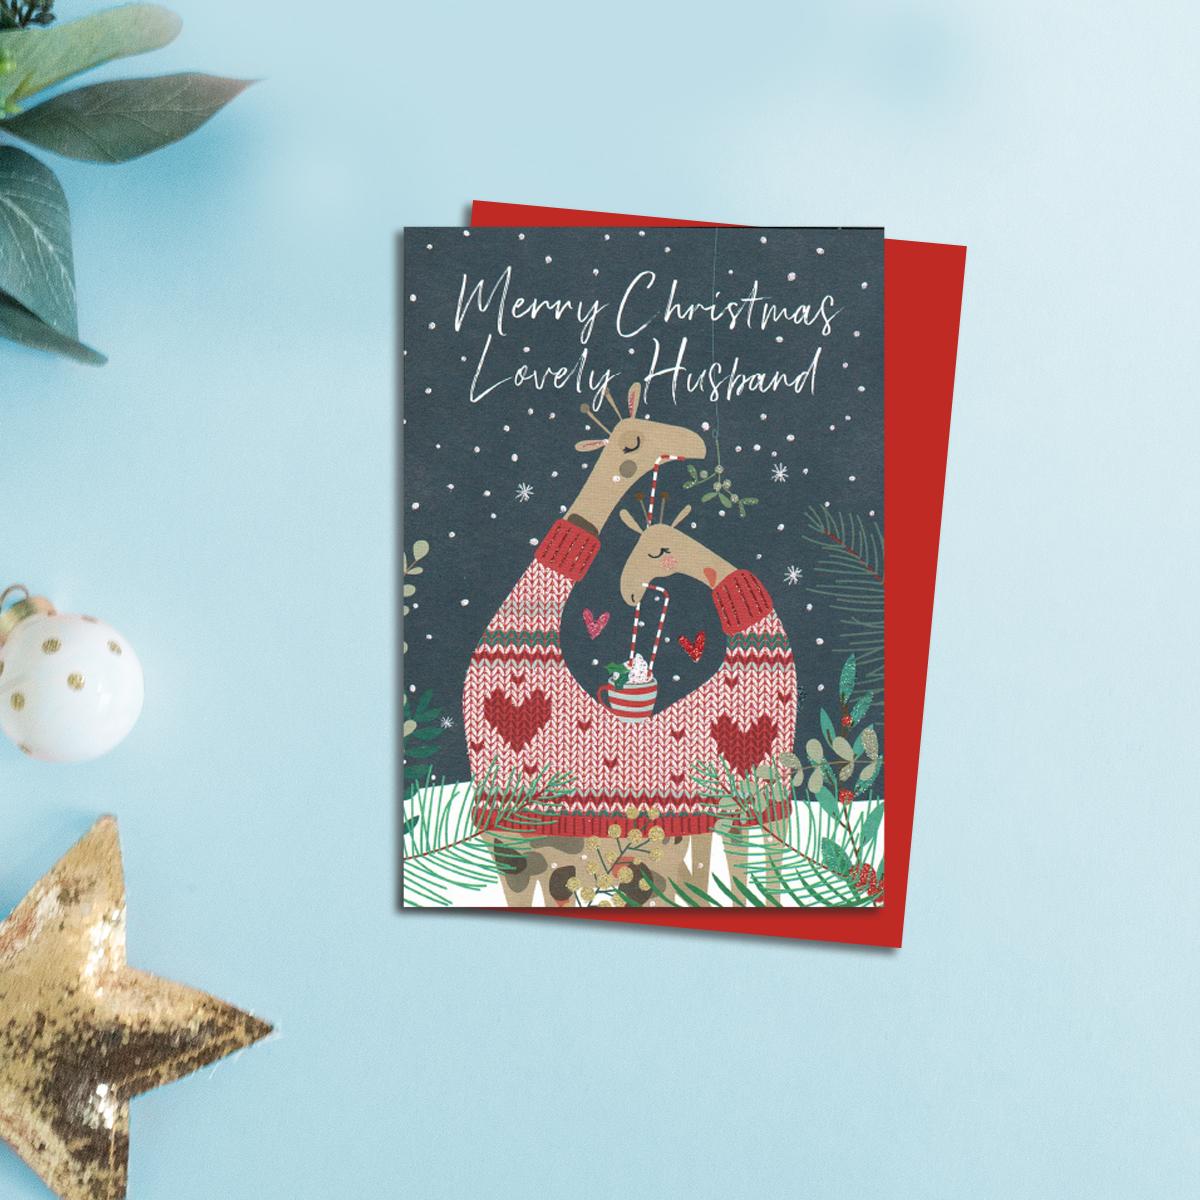 Husband Two Giraffes Christmas Card Alongside Its Red Envelope